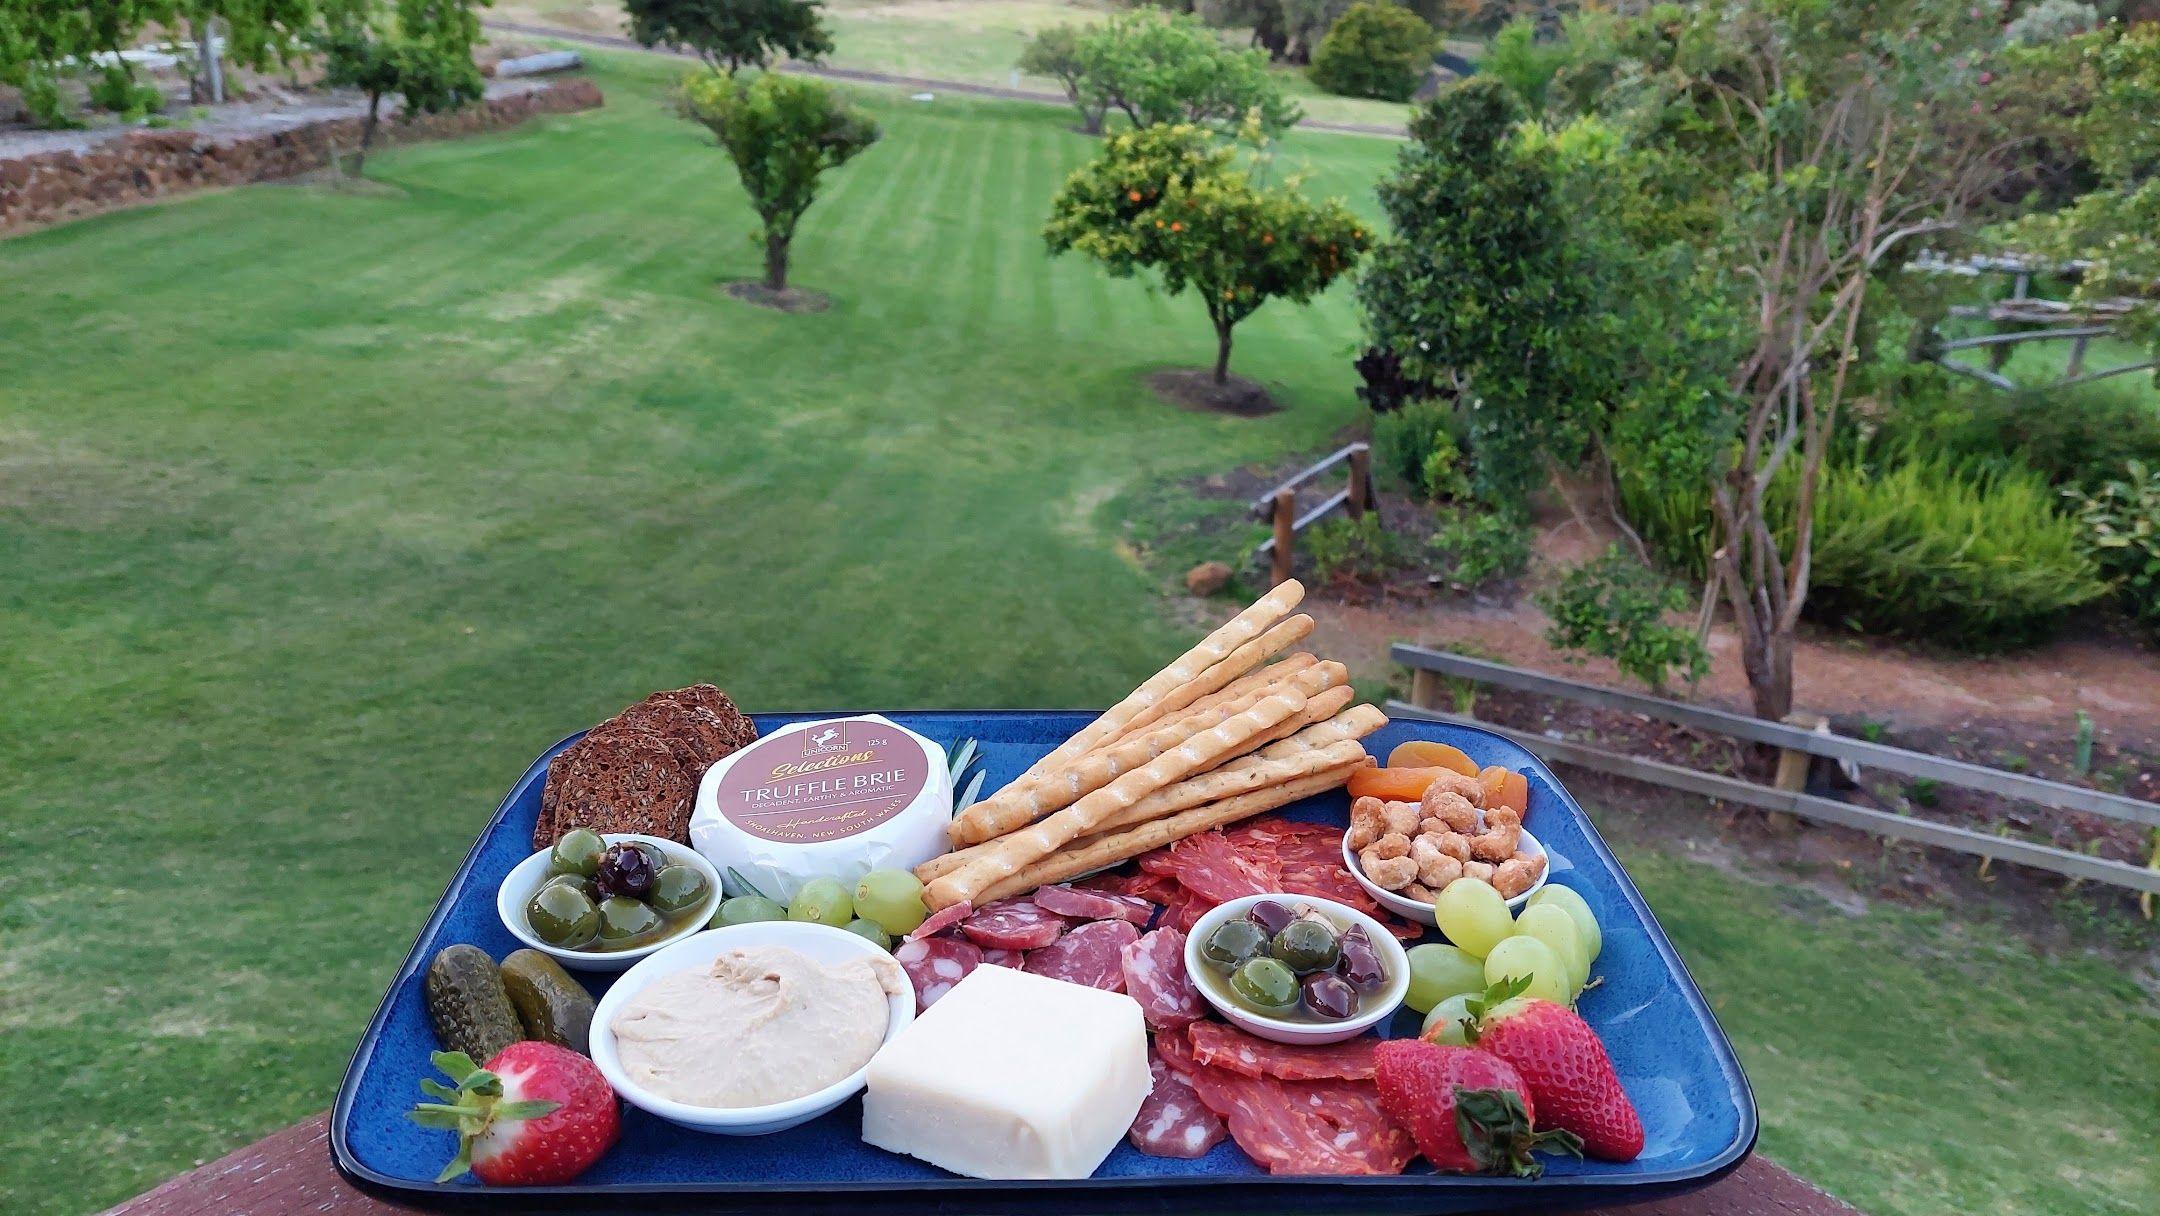 Gourmet platter overlooking the gardens at Rivendell Estate.